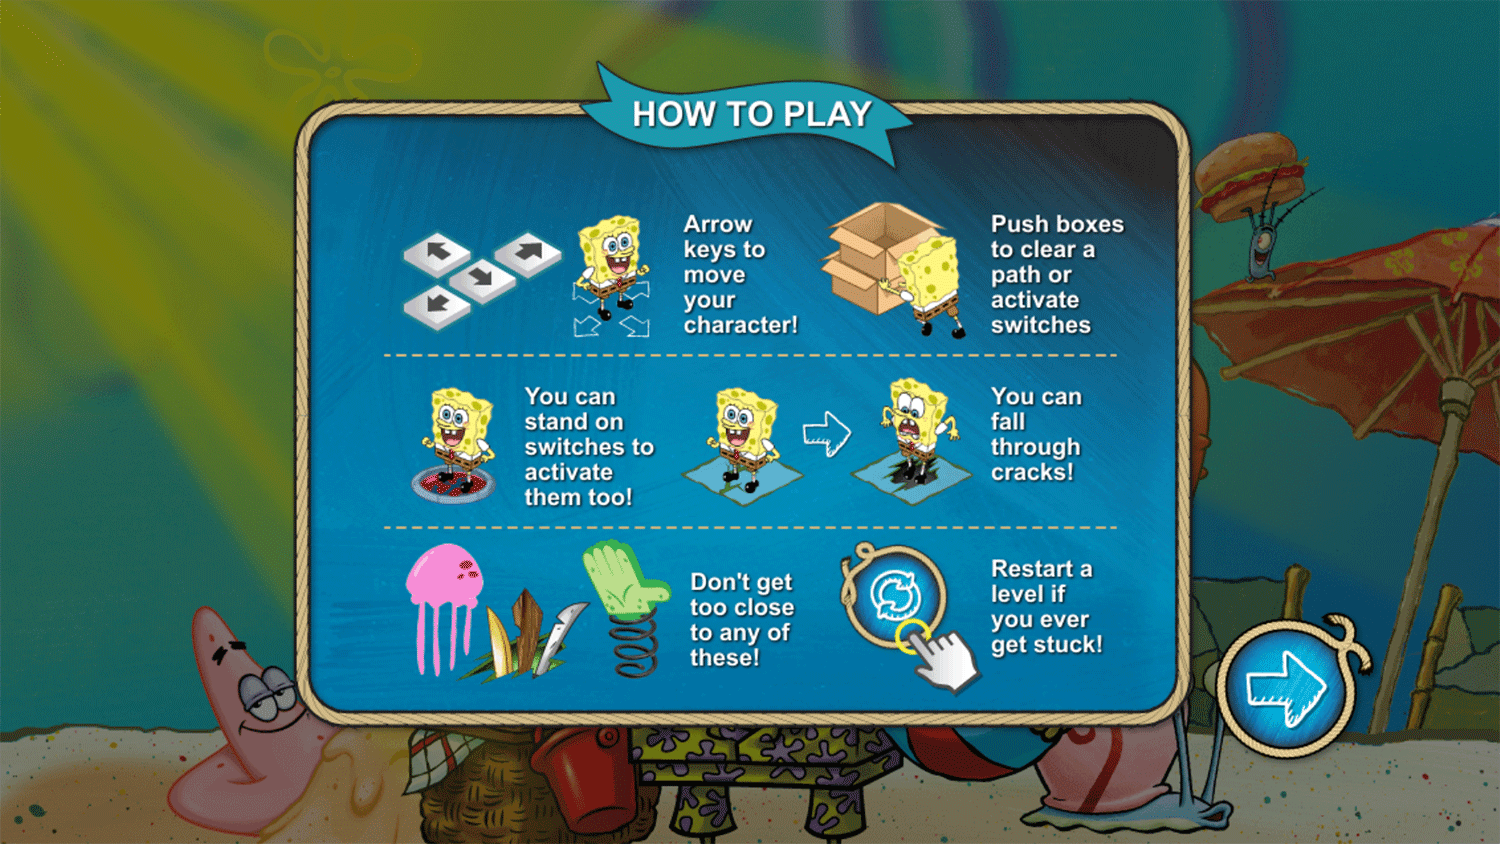 Spongebob Squarepants Beachy Keen How To Play Screenshots.